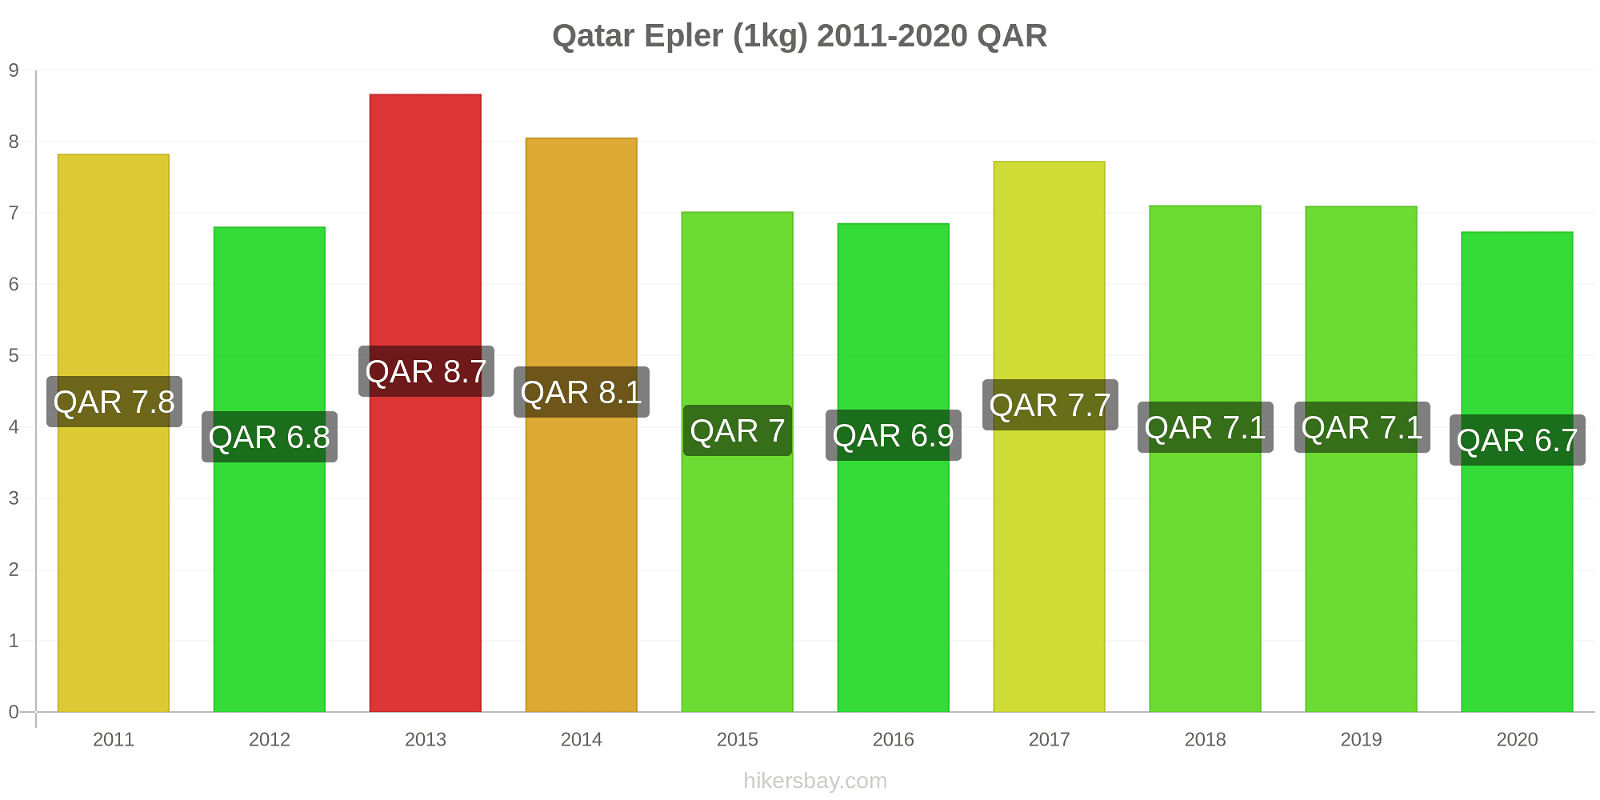 Qatar prisendringer Epler (1kg) hikersbay.com